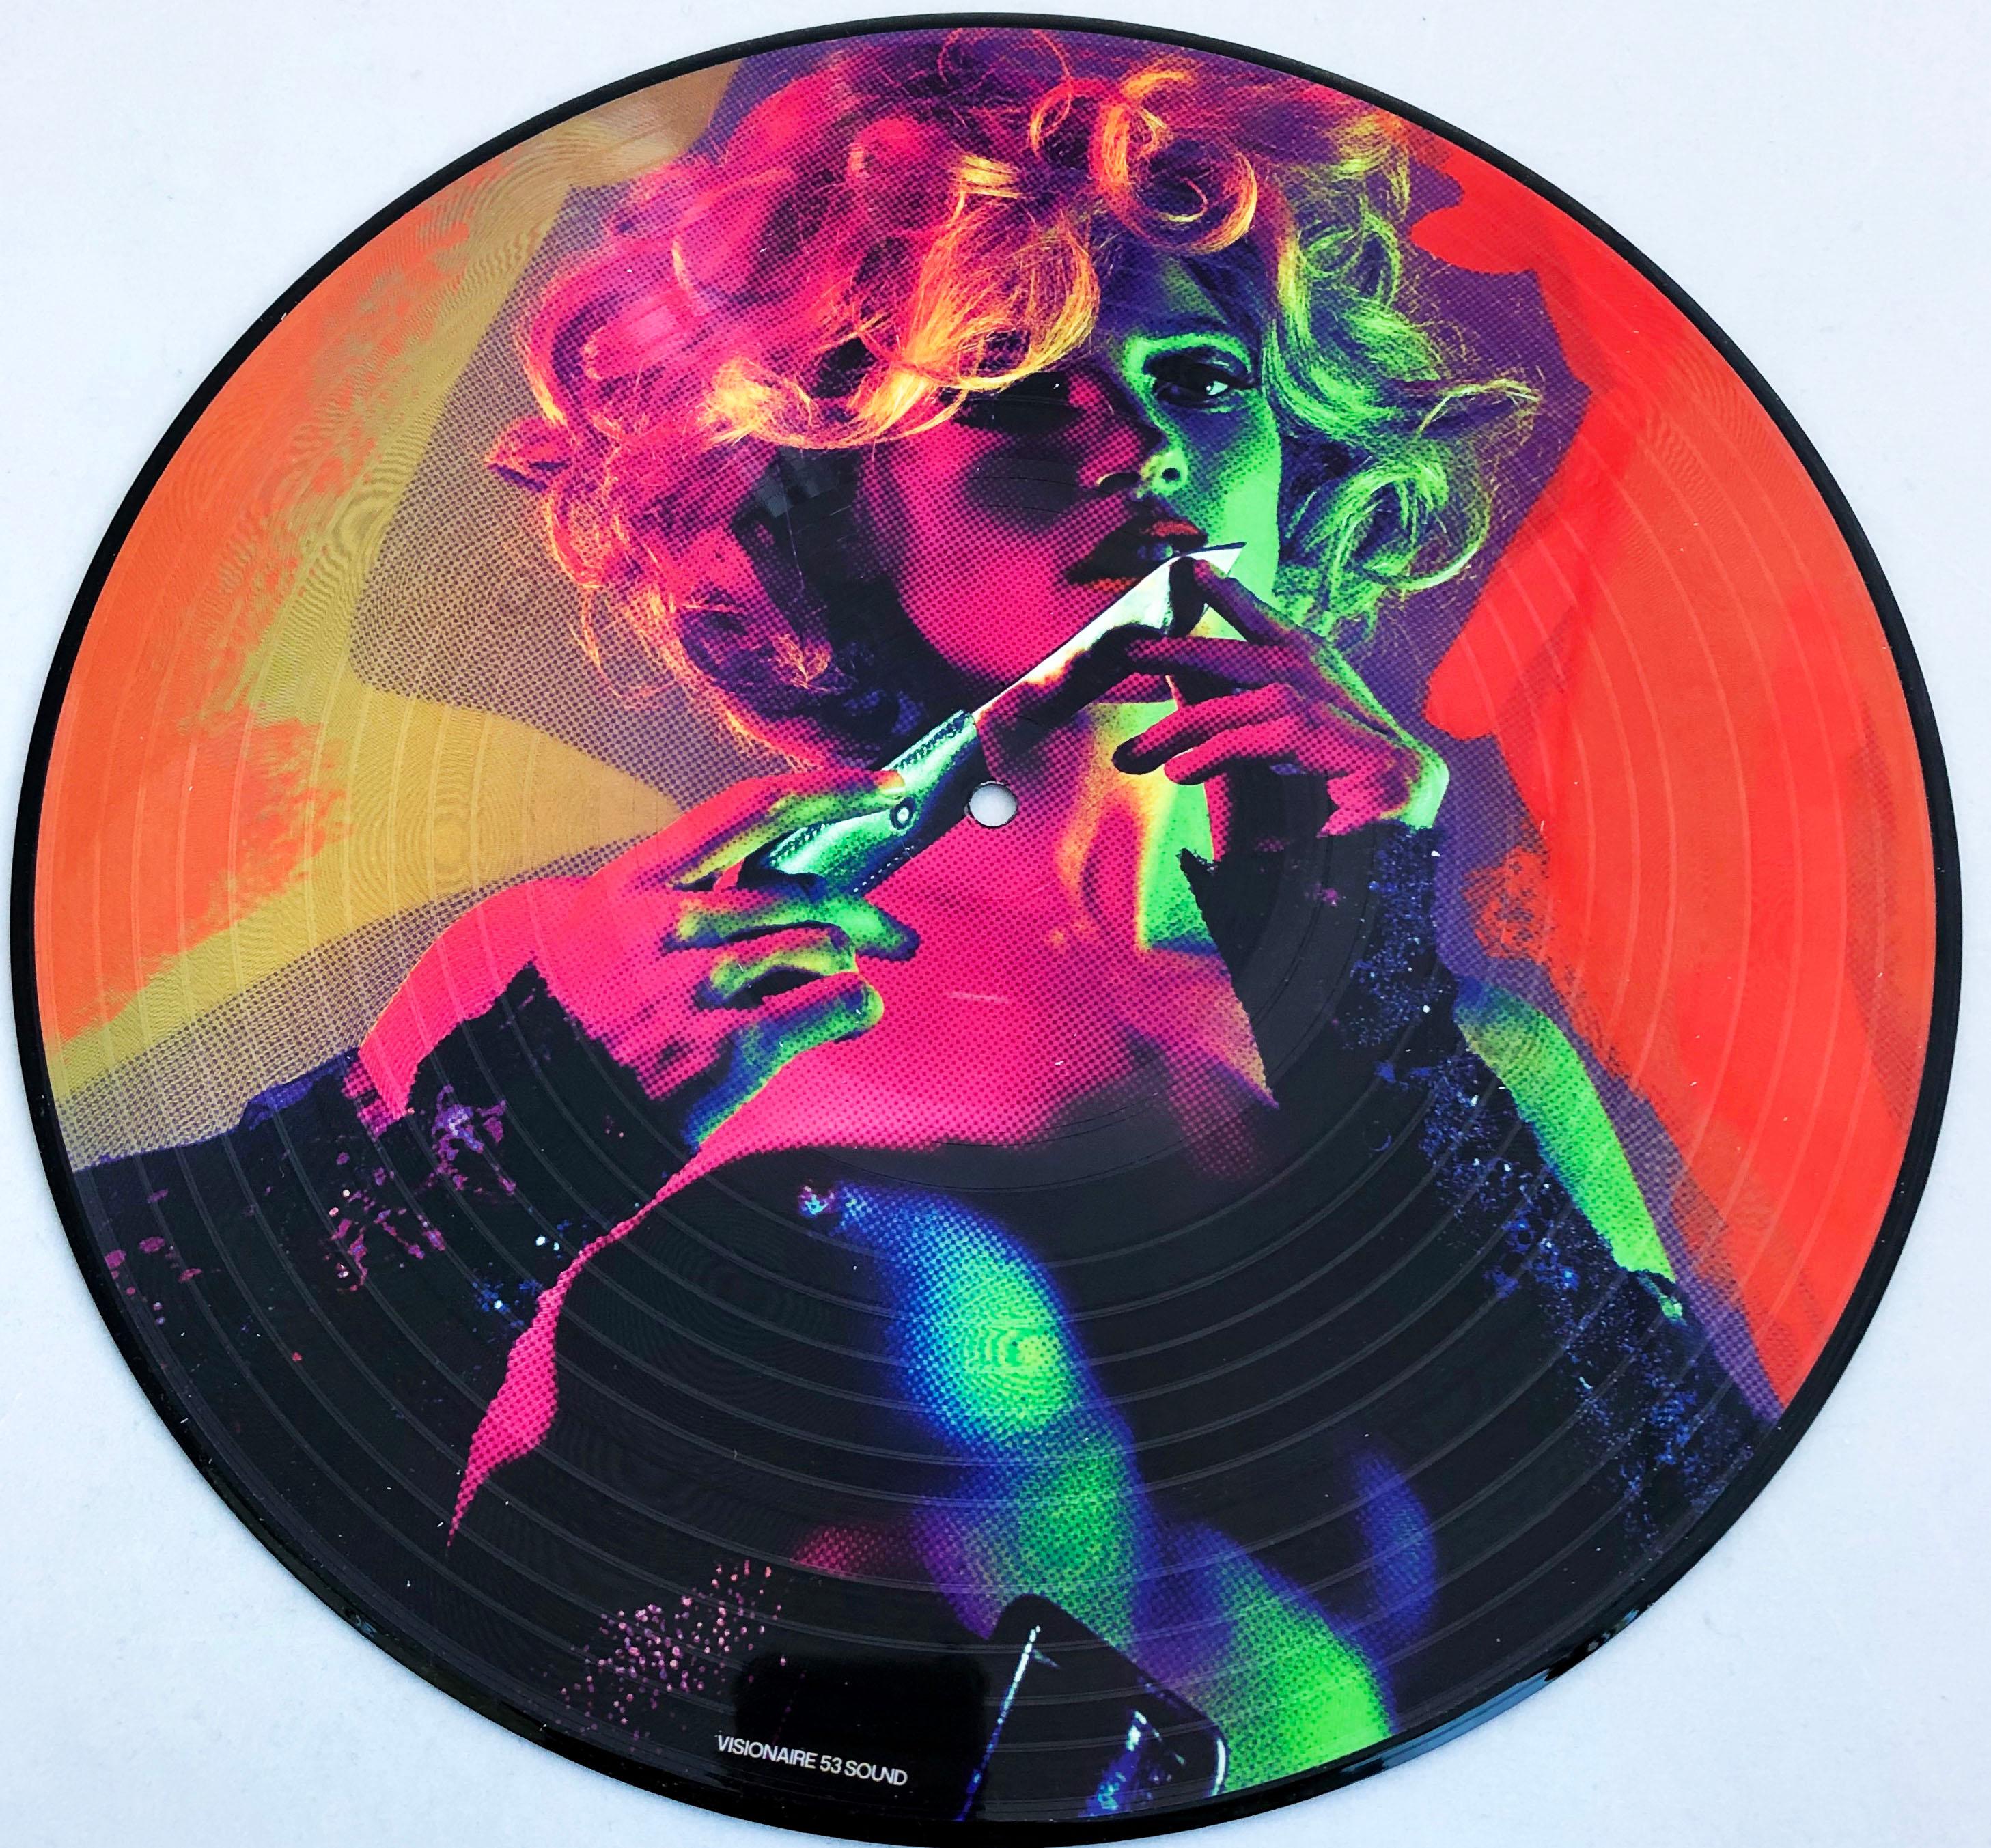 Kate Moss Vinyl Record Art Mert Alas et Marcus Piggott (Mert and Marcus)  - Pop Art Mixed Media Art par Mert Alas and Marcus Pigott 